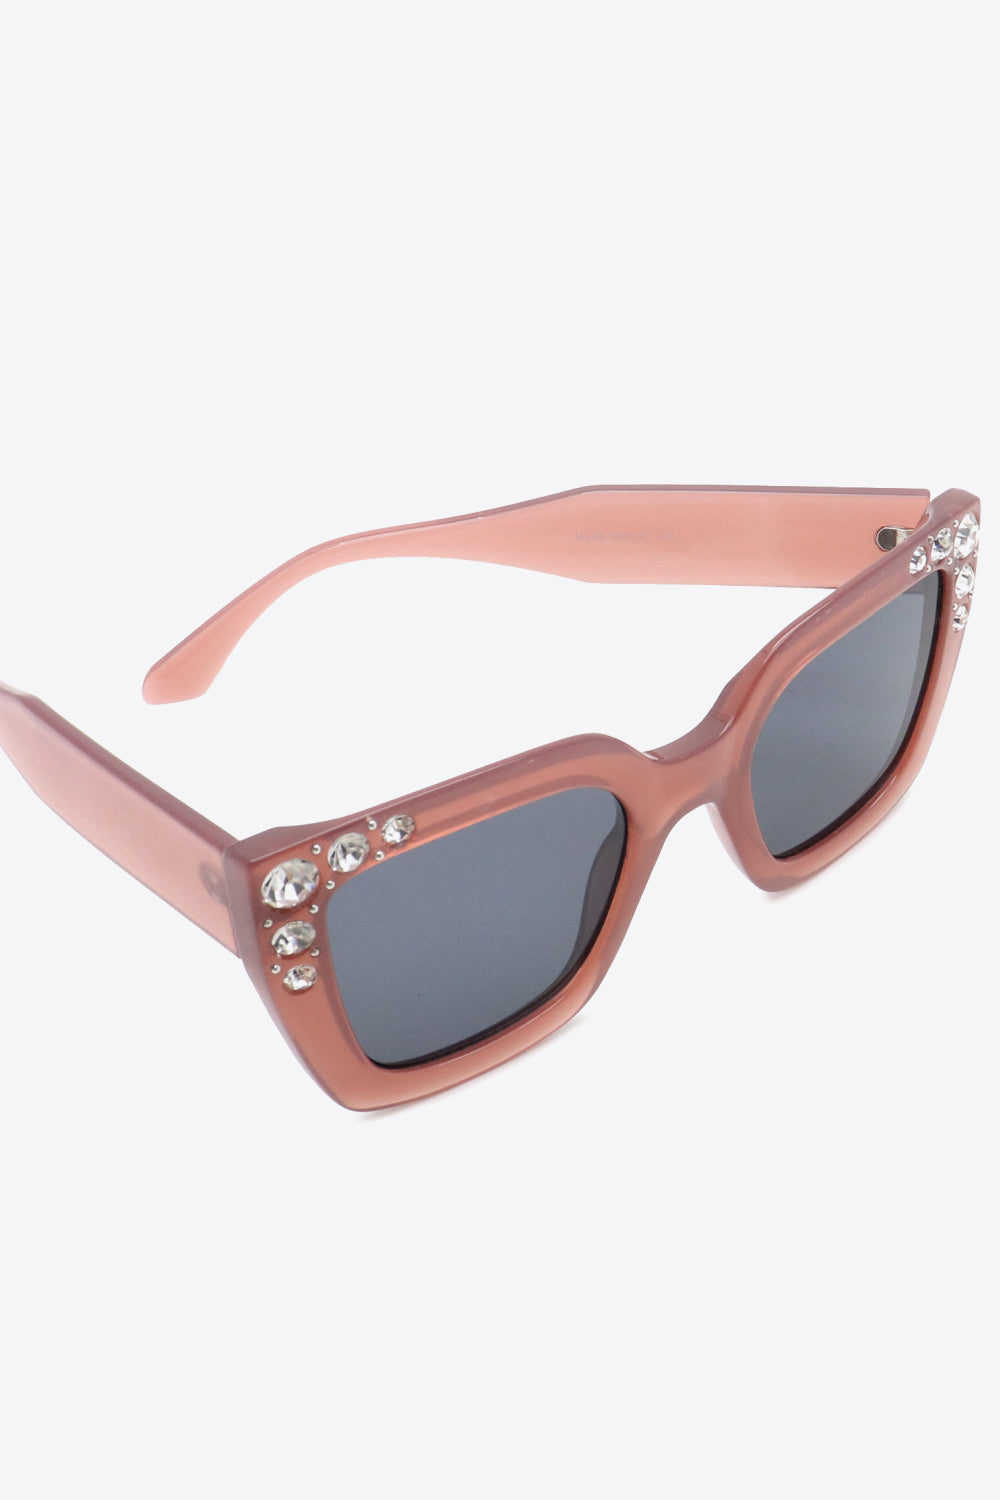 Diamond Girl Sunglasses